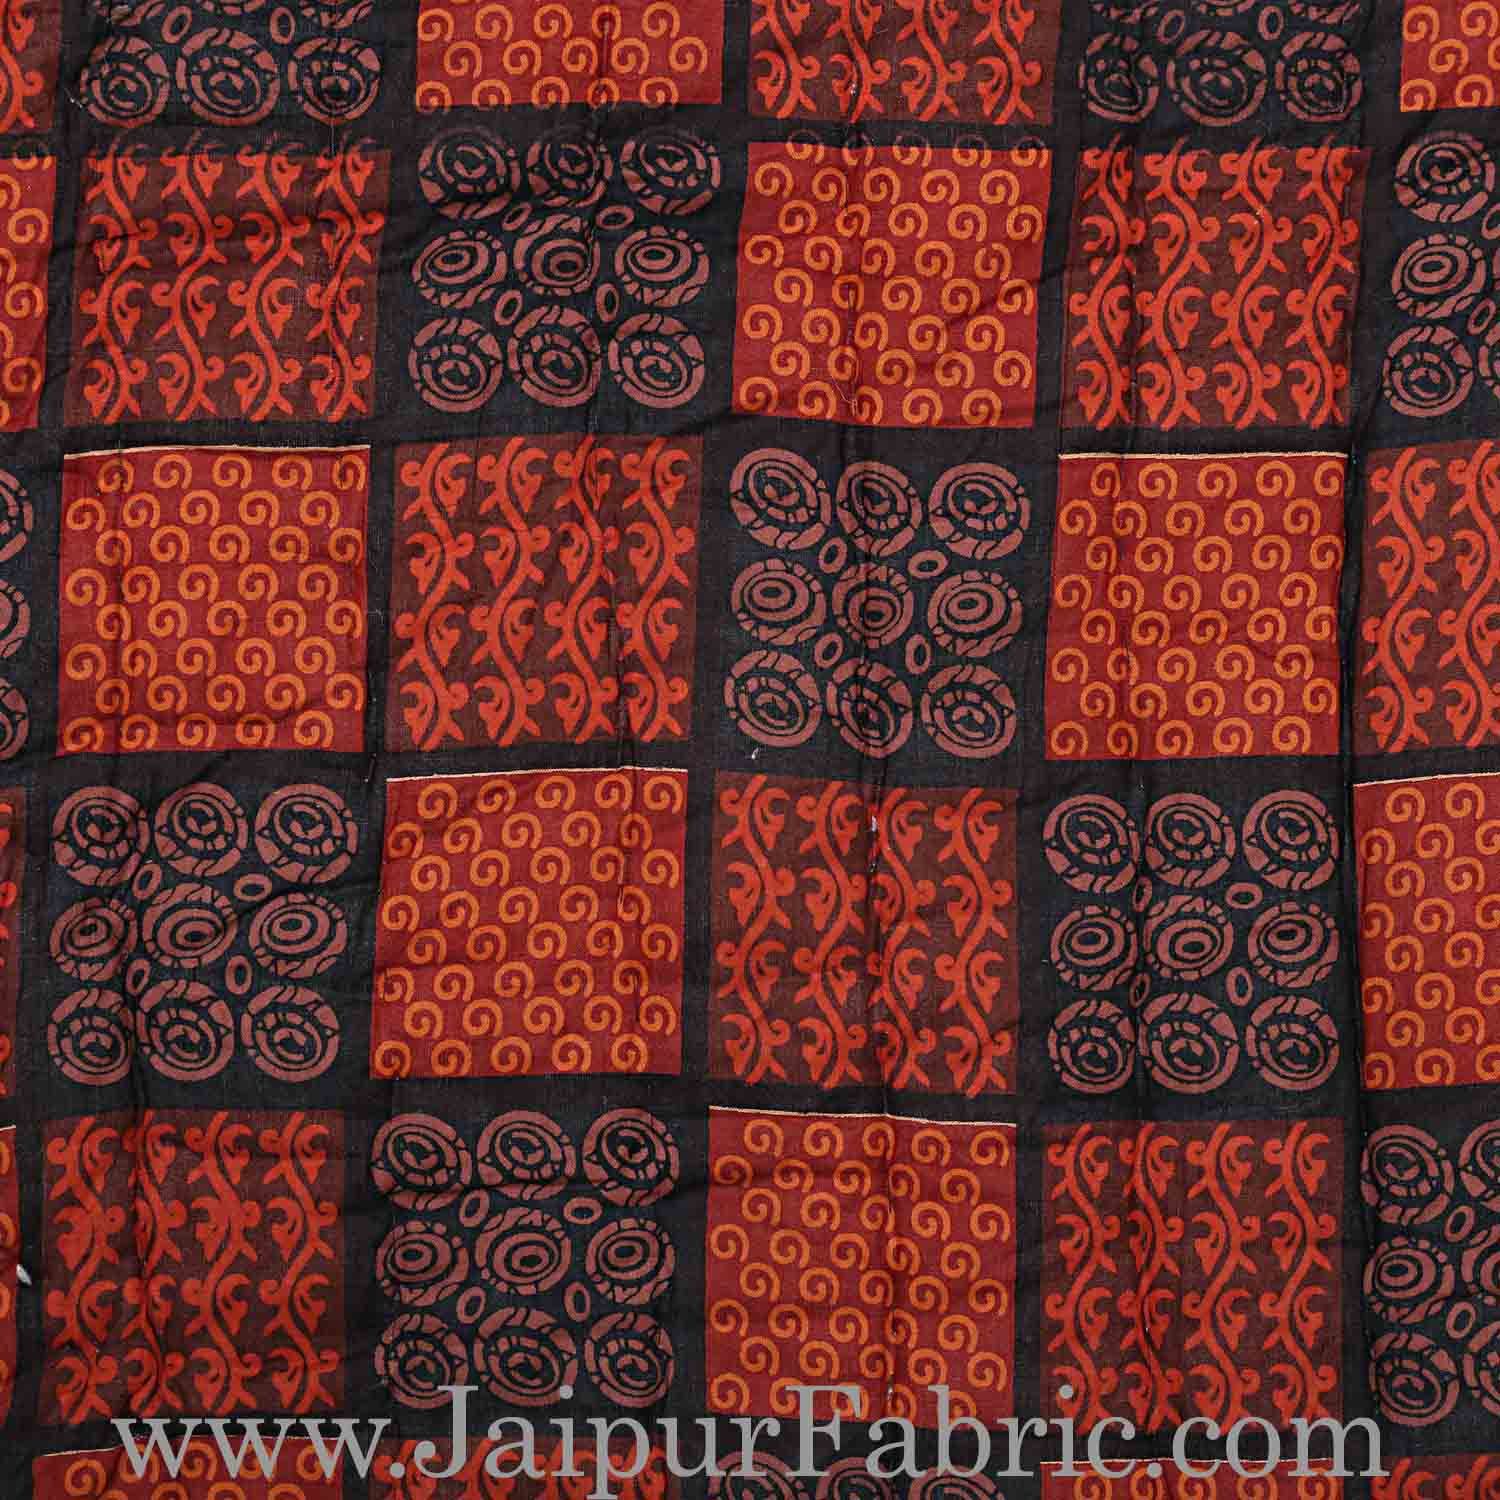 Double Bed Quilt  Big Check & Dabu Print Cotton (Multicolour)